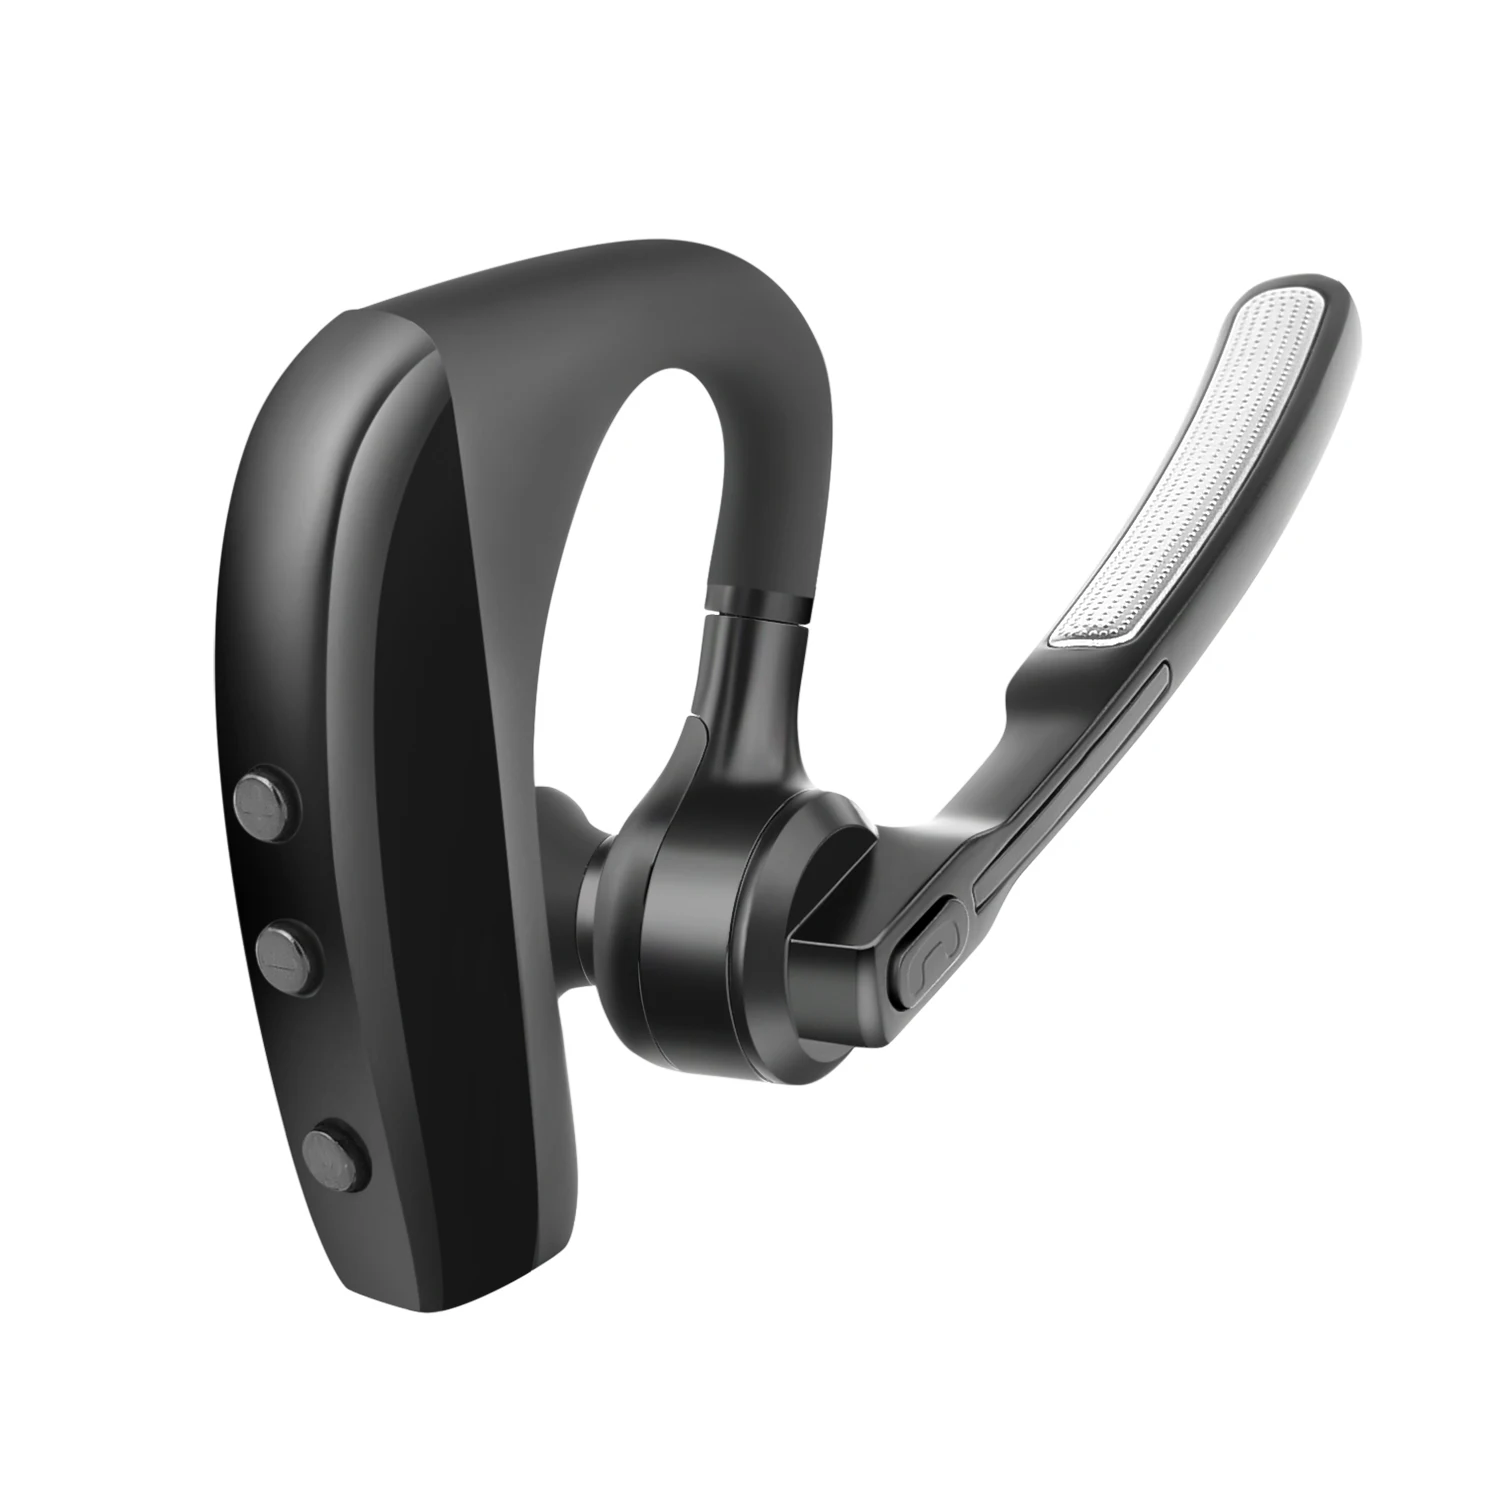 Bluetooth Headphone Handsfree Stereo Business Wireless Bluetooth Headset Buy Bluetooth Headset Bluetooth Headphone Bluetooth Headset For Business Product On Alibaba Com